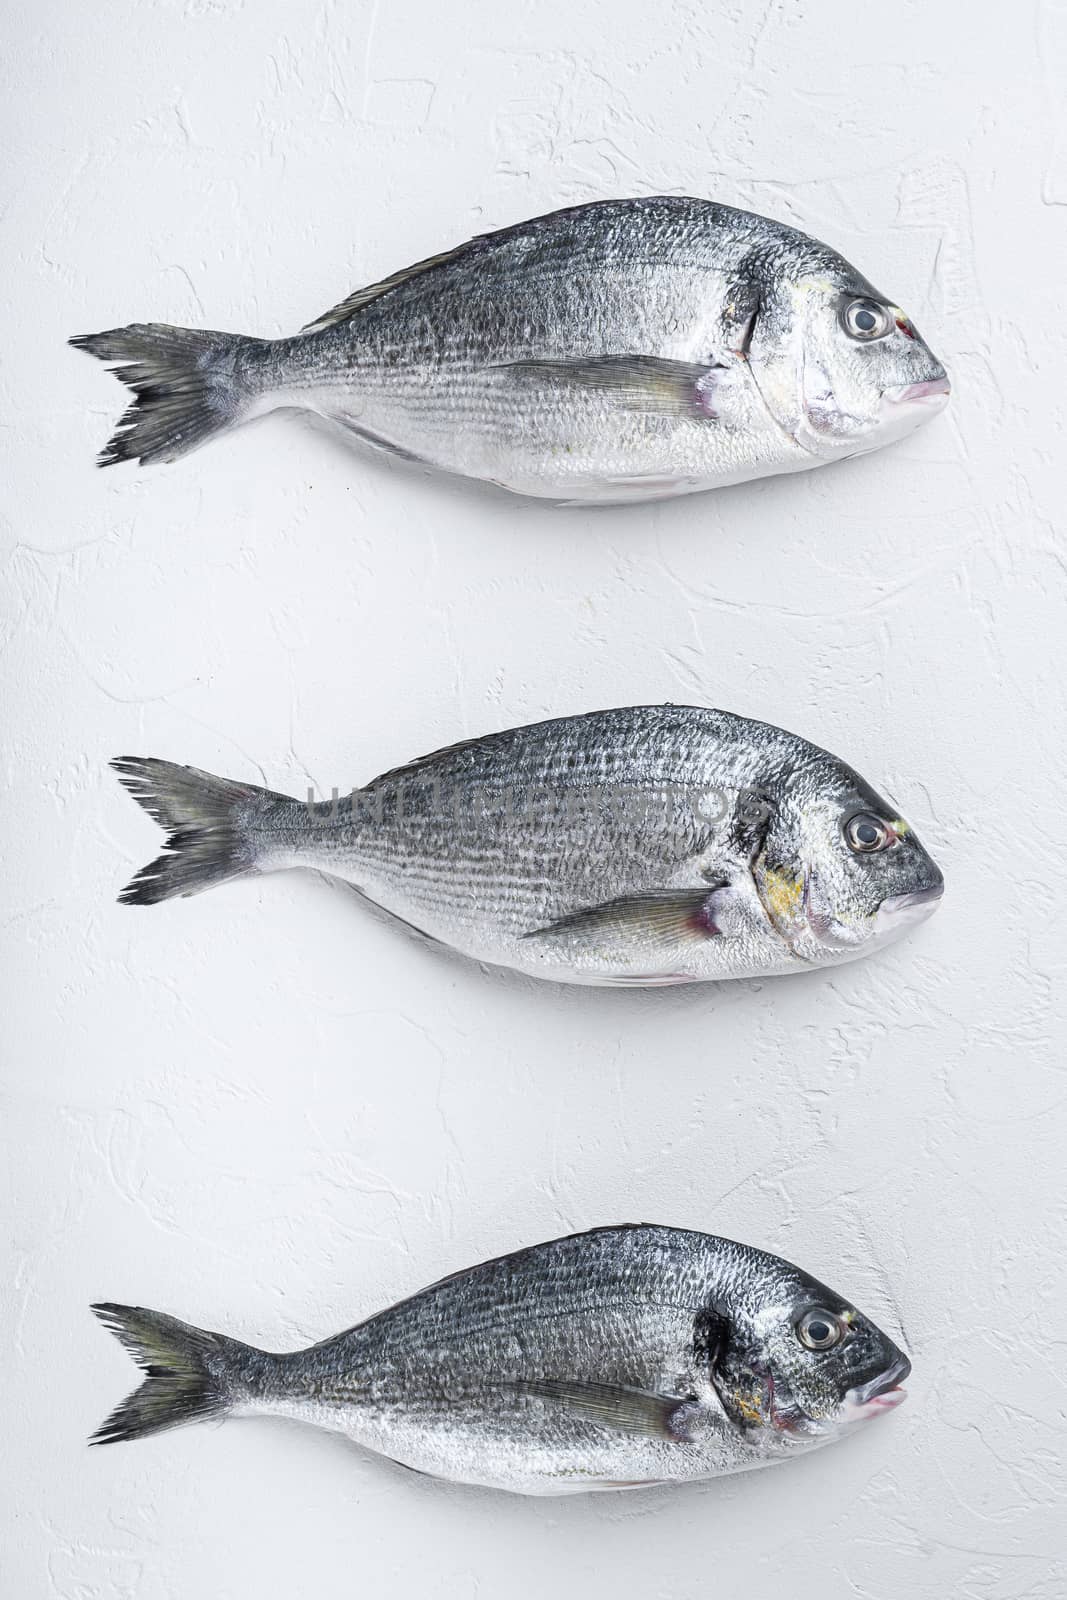 Raw three sea bream or Gilt head bream dorada fish on white background, top view